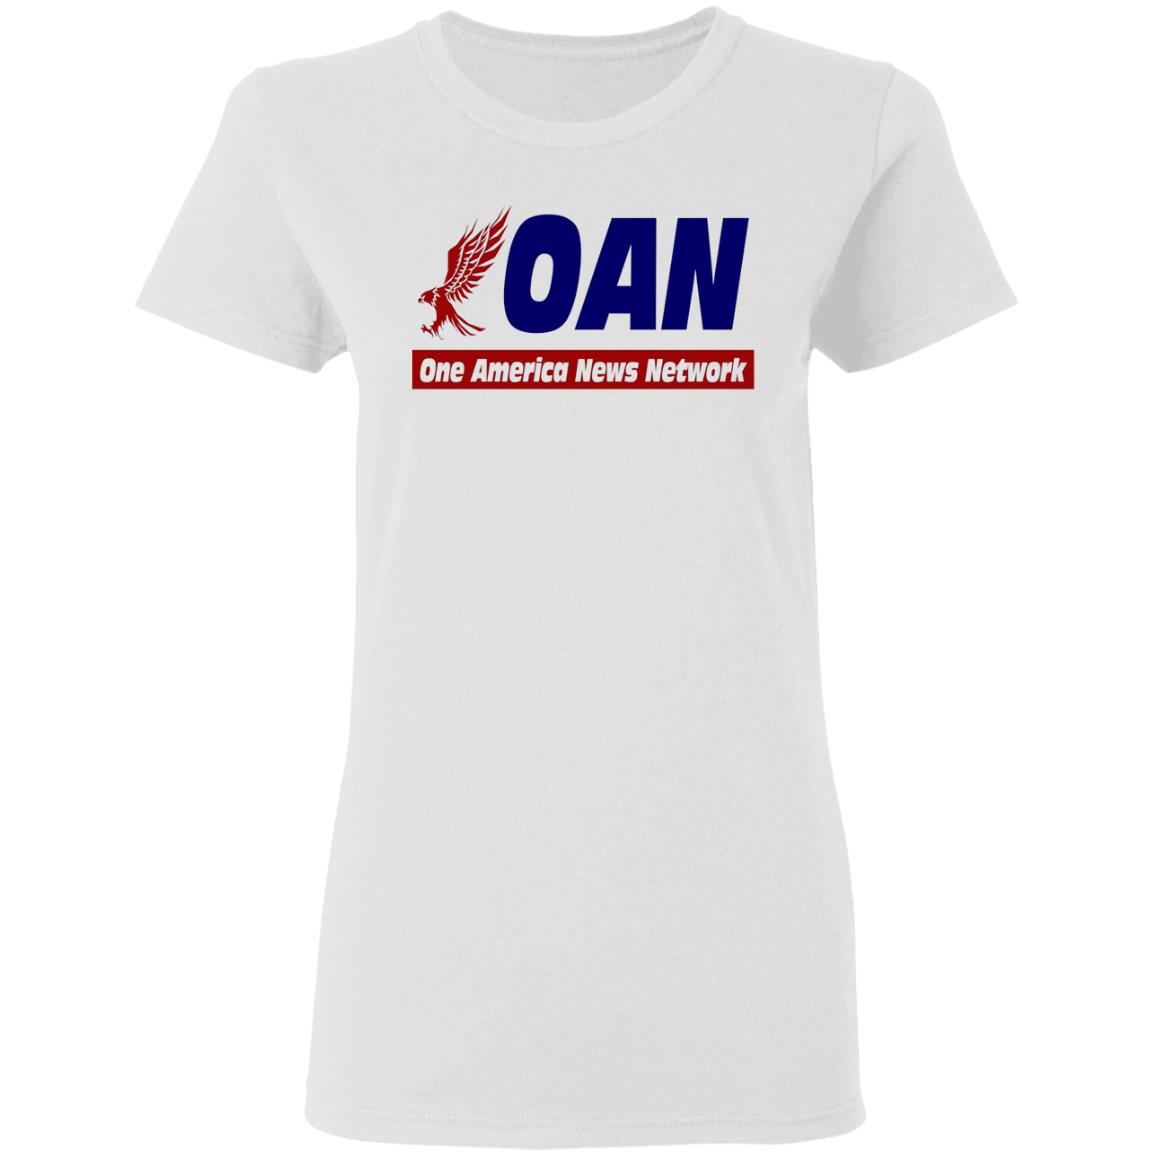 Mike Gundy Oan Shirt - Oan One america news network T-Shirt